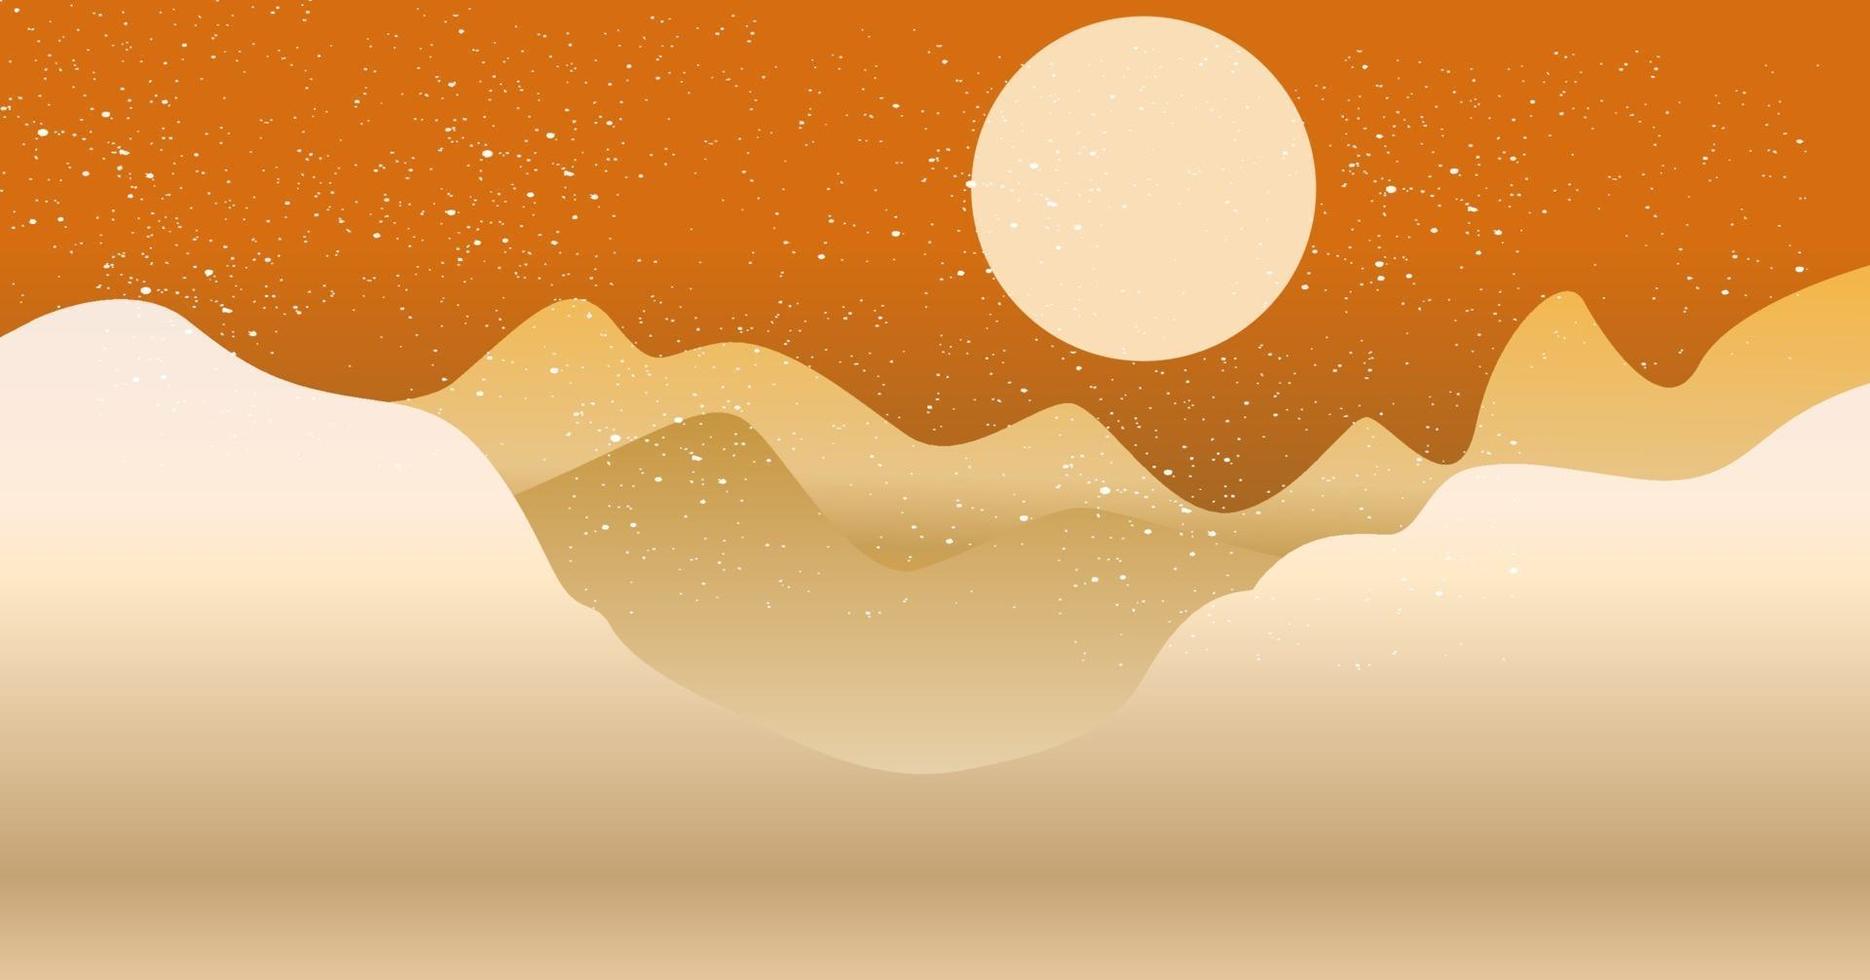 moon and desert illustration vector image